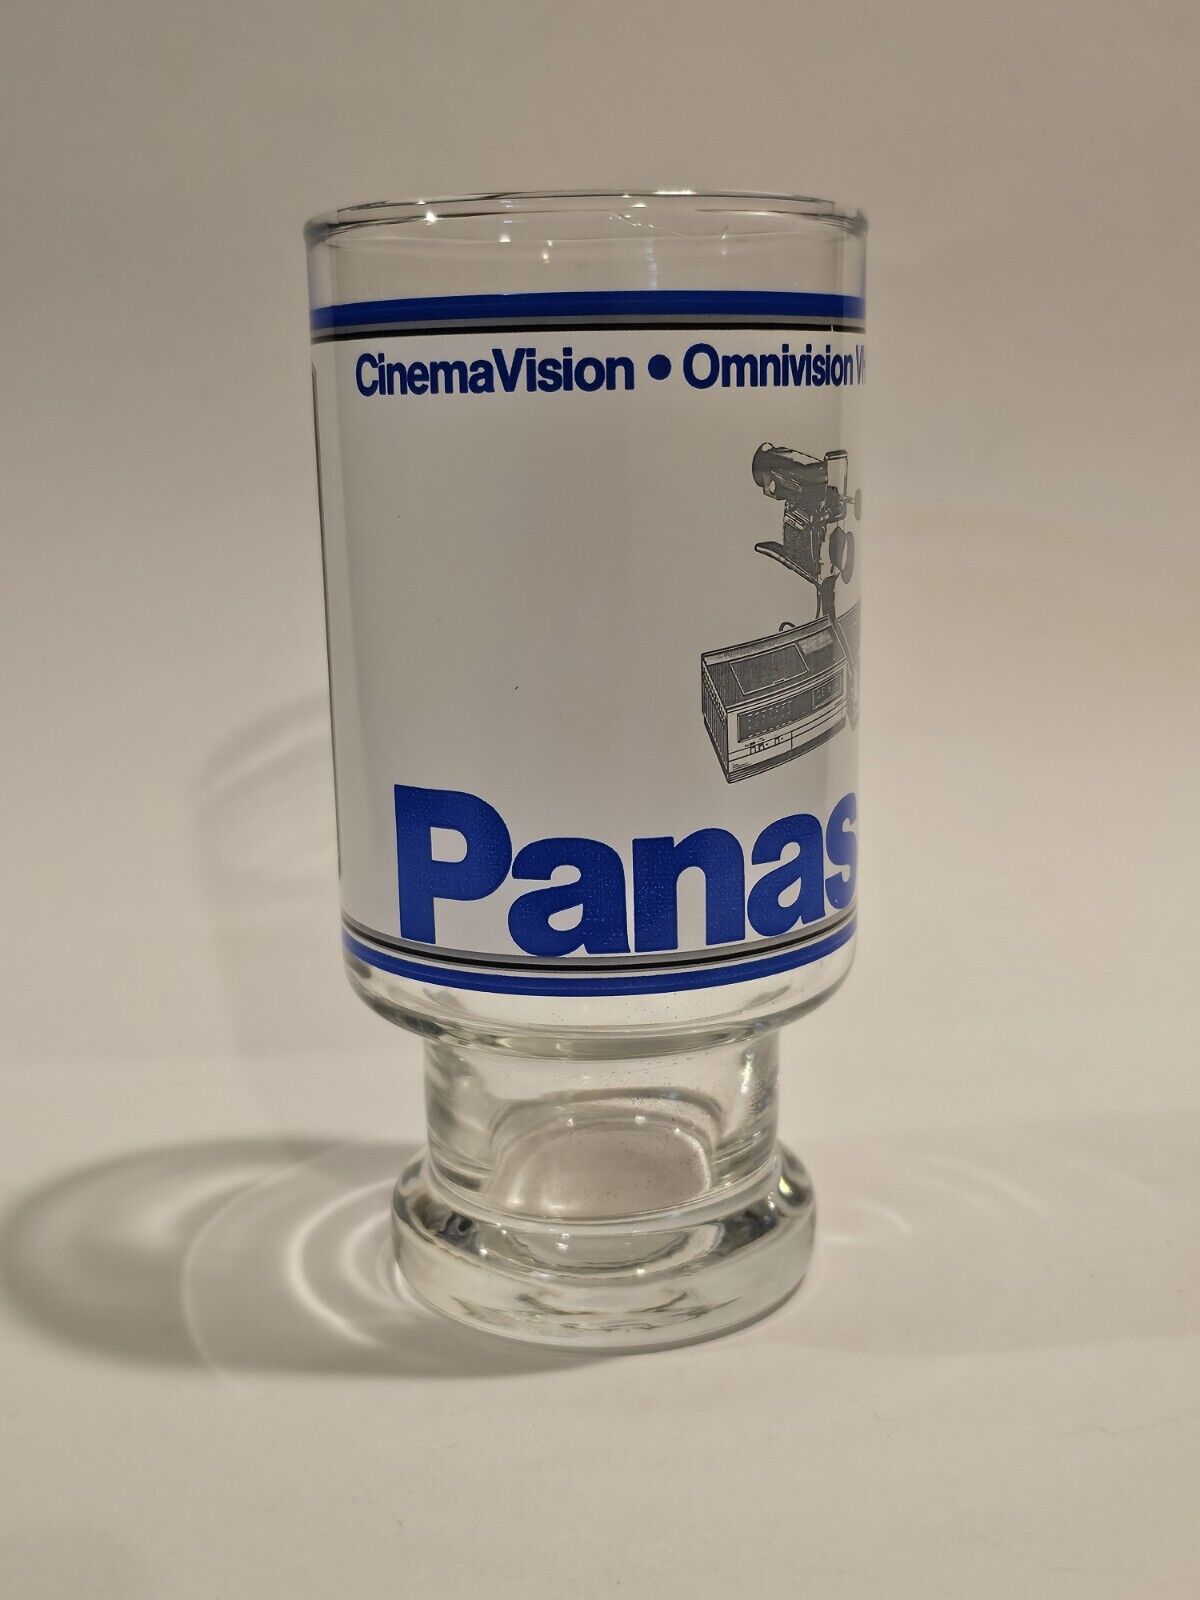 Panasonic Glass Cup CinemaVision Omnivision ColorPilot Tv